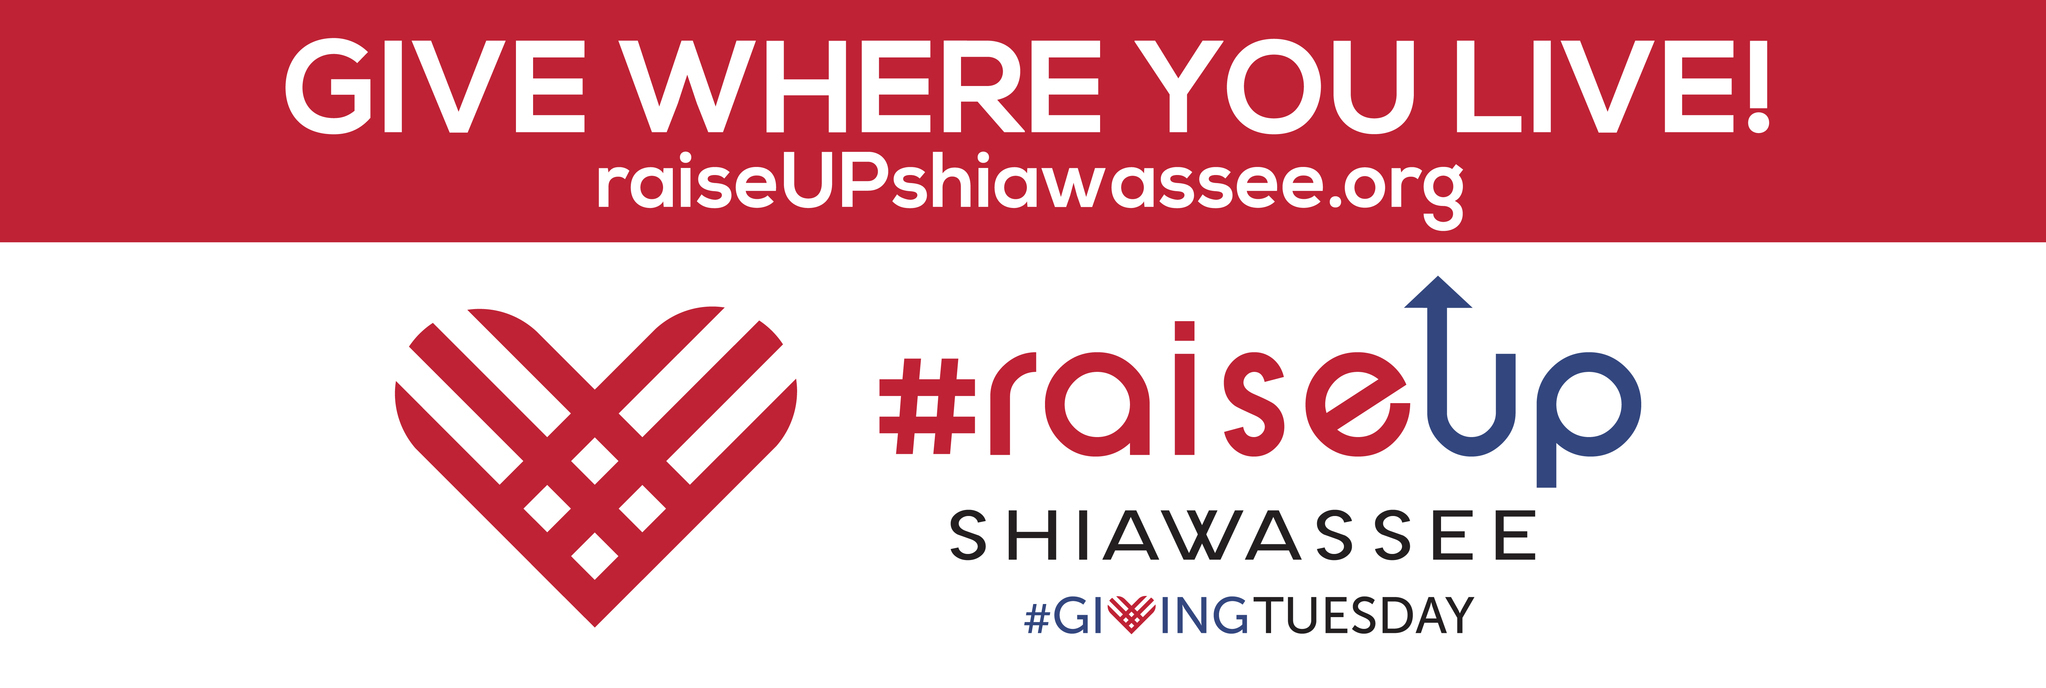 Raise Up Shiawassee for GivingTuesday